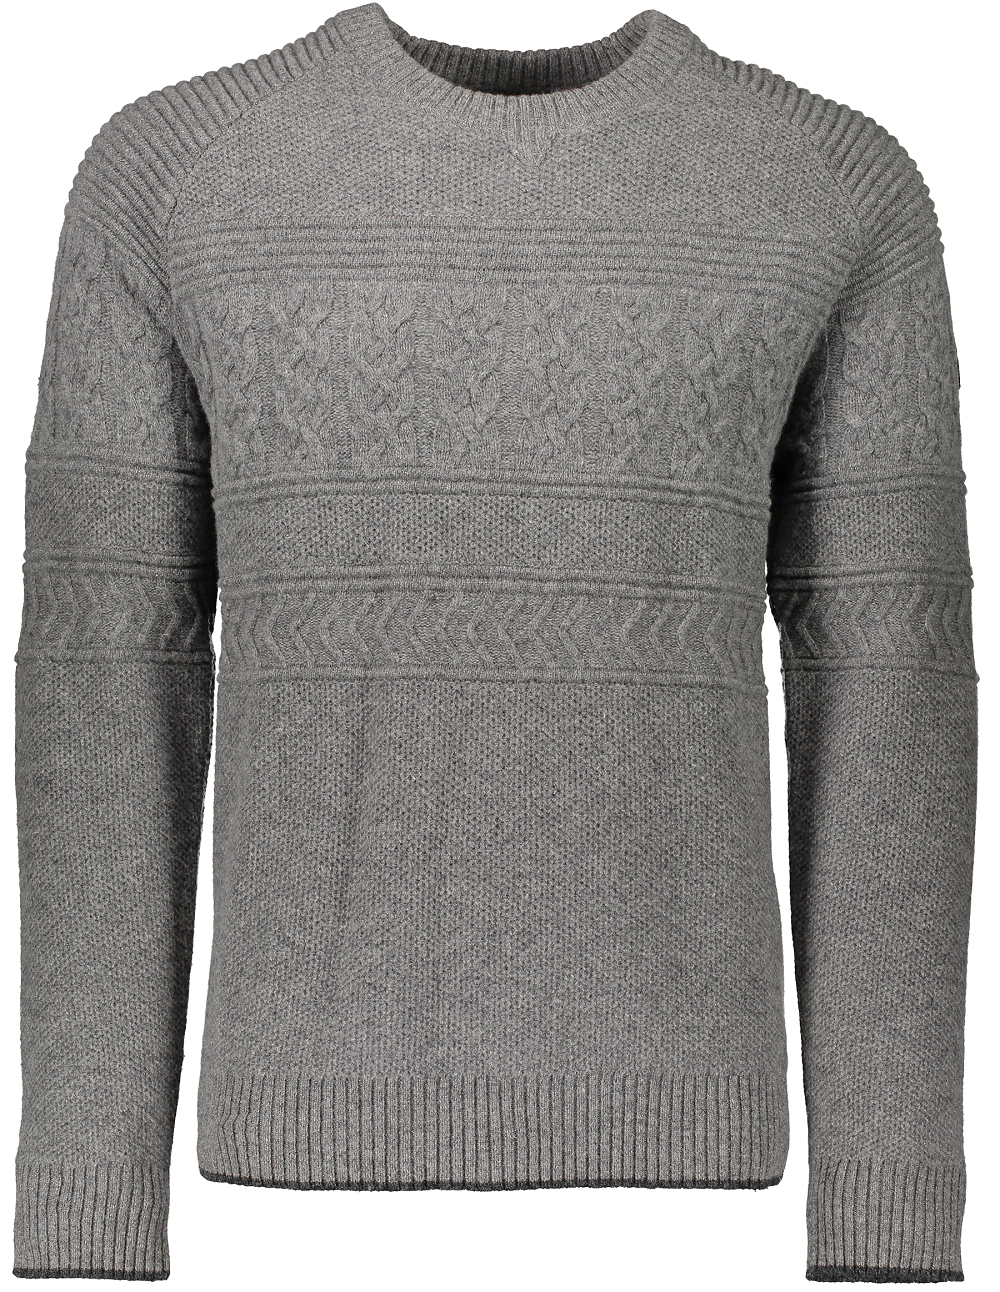 Obermeyer Textured Mens Crewneck Sweater 2020